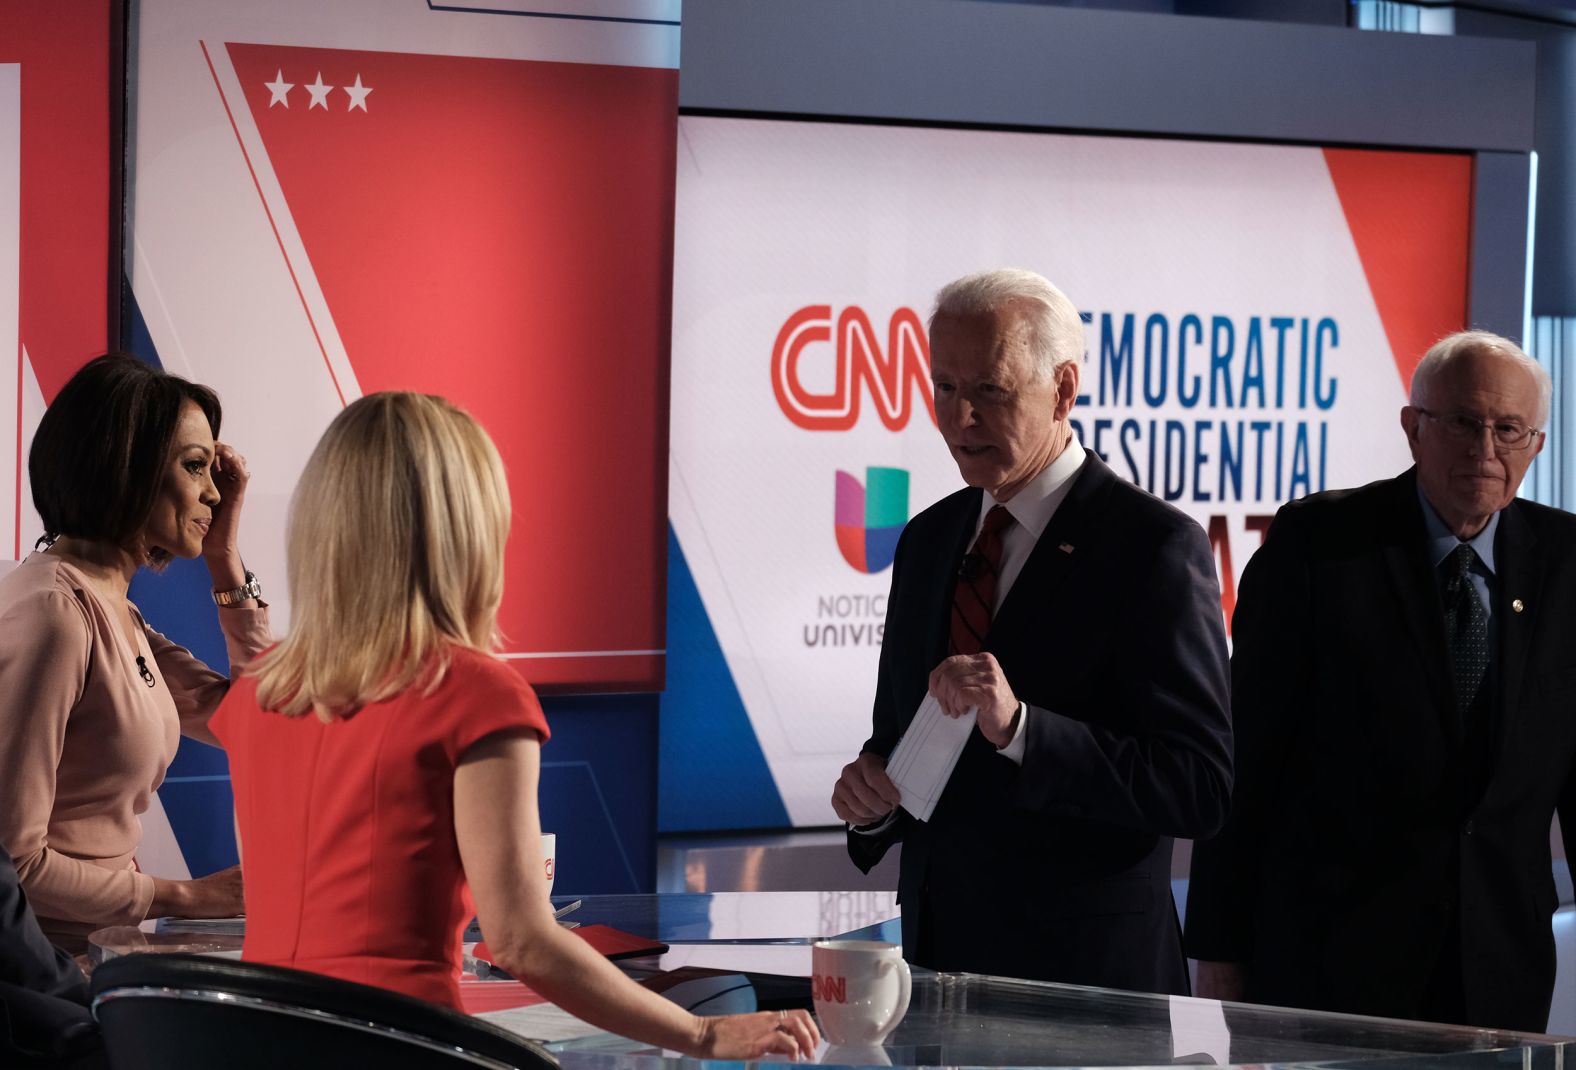 Sanders walks by as Biden talks to the moderators after the debate.